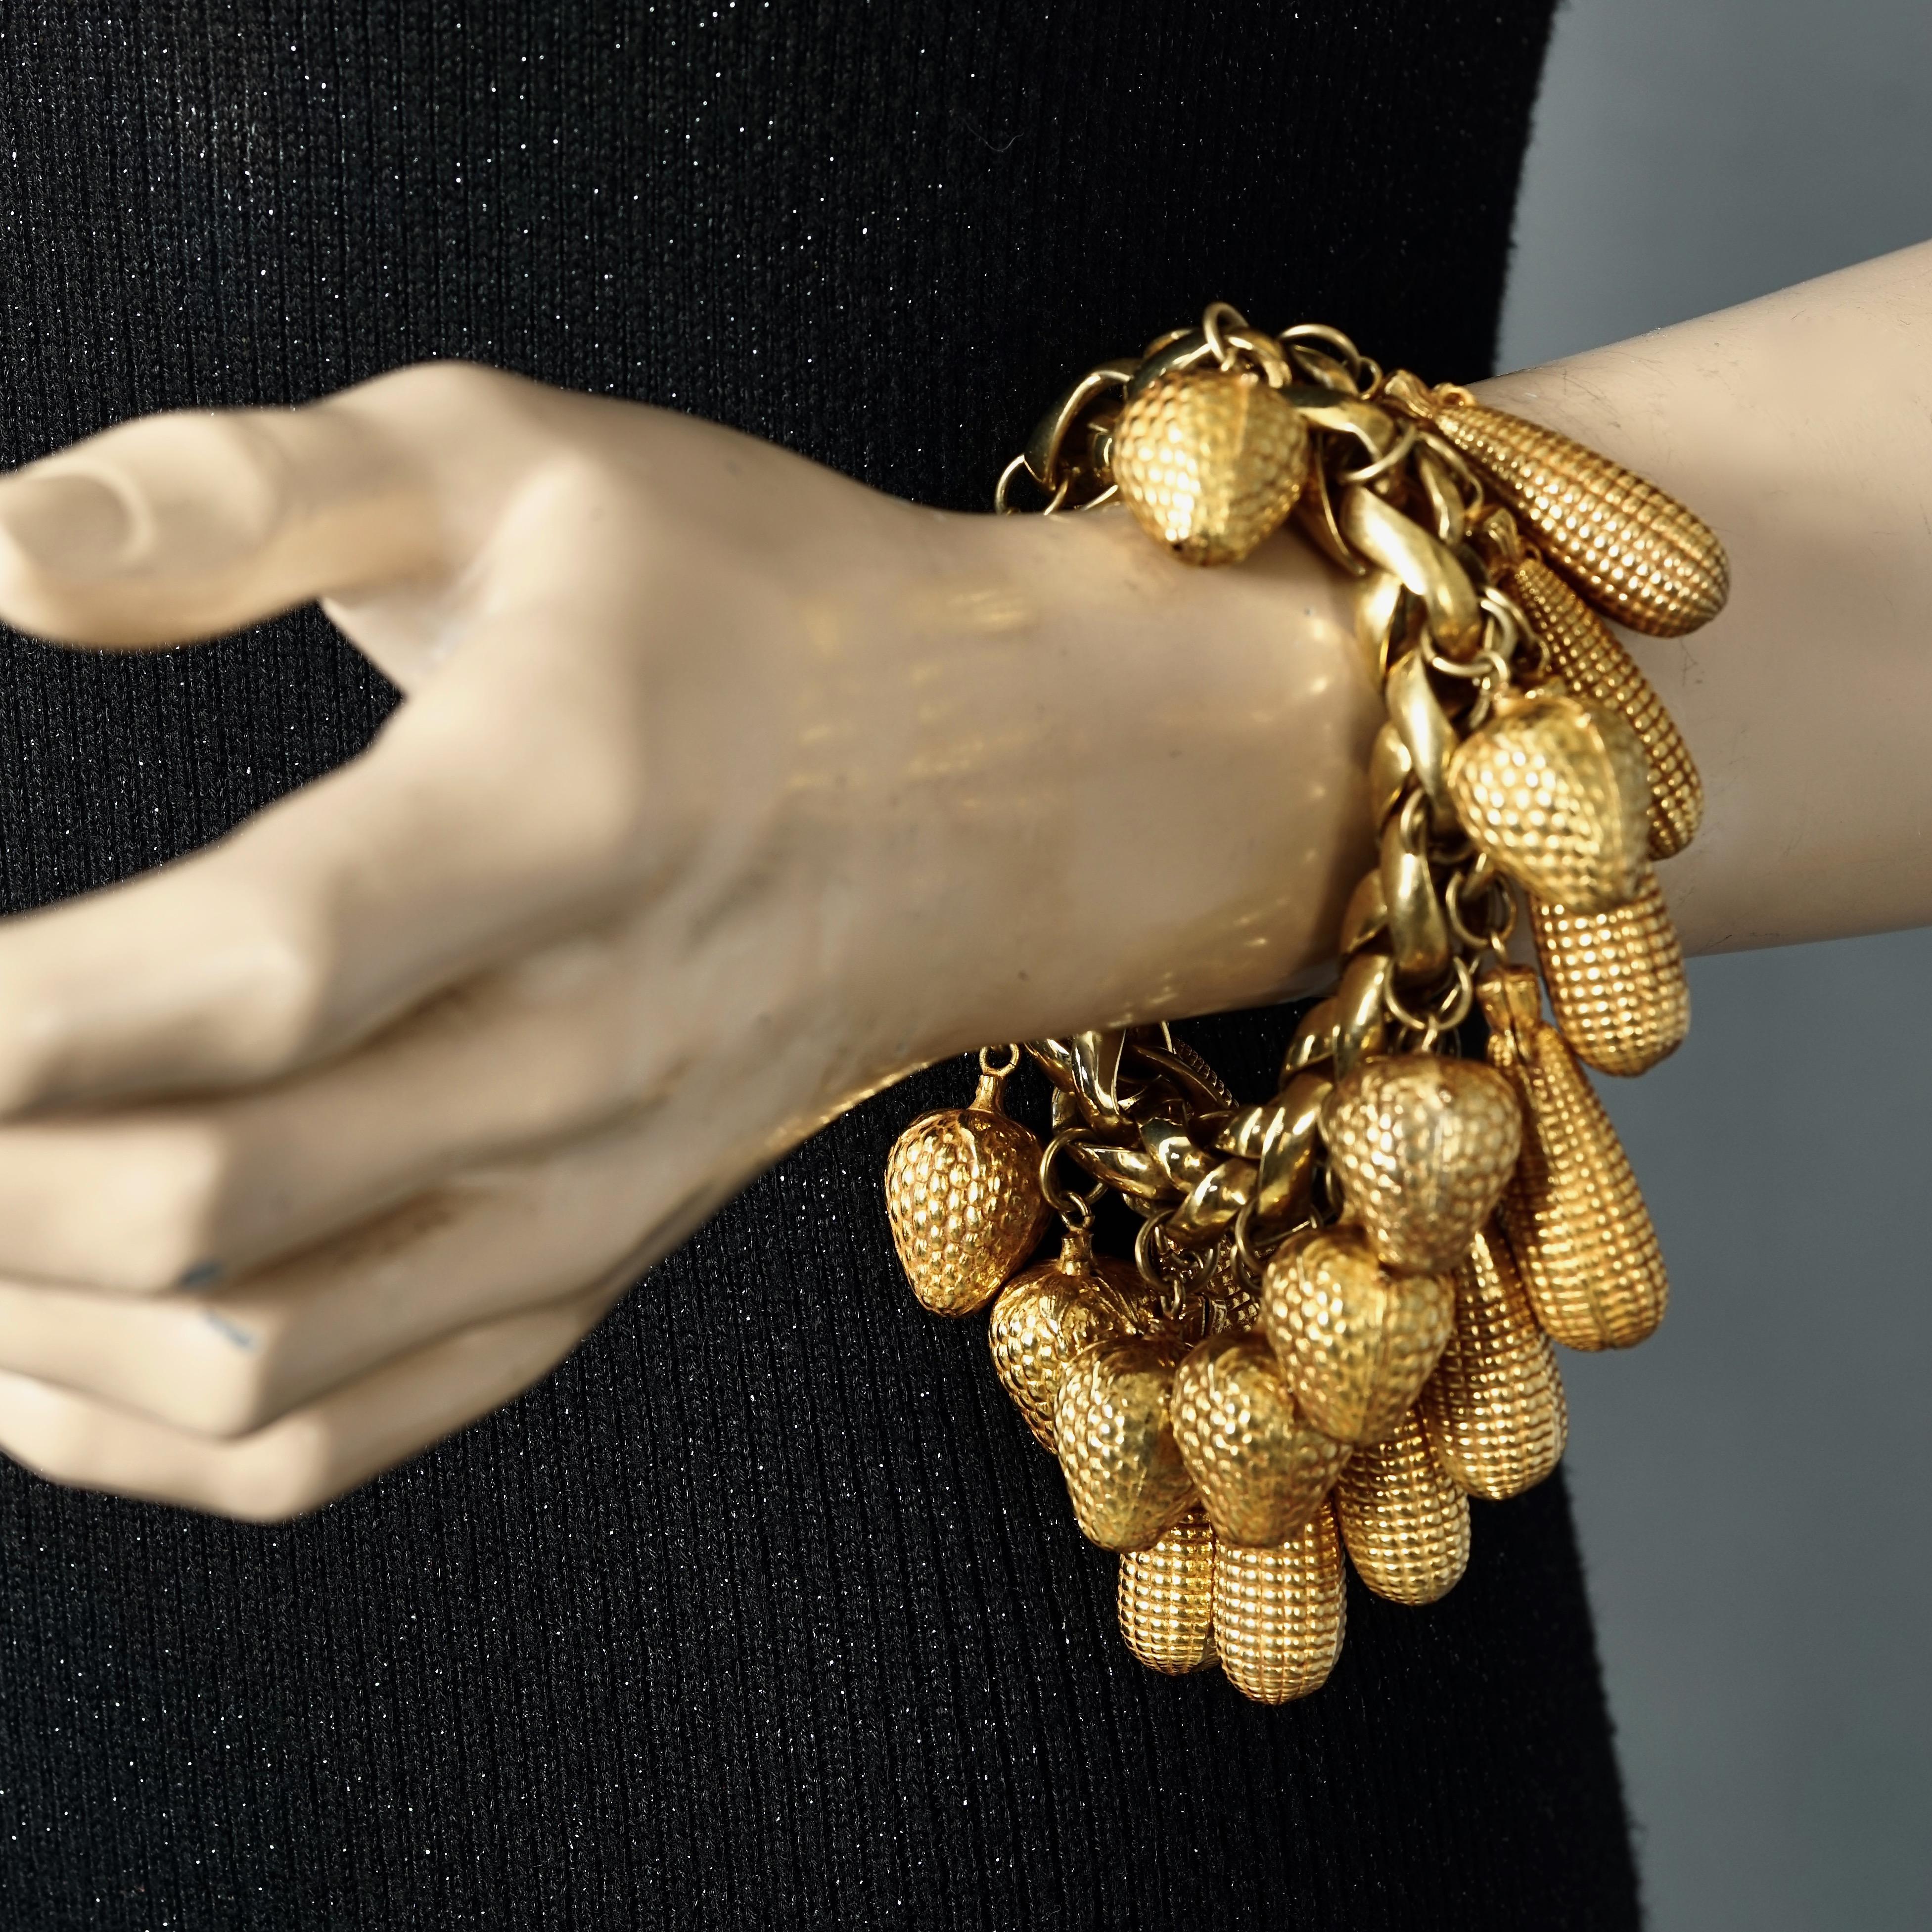 Vintage DOMINIQUE AURIENTIS Vine Leaves Wide Cuff Bracelet

Measurements:
Height: 2.12 inches (5.4 cm)
Wearable Length: 7.87 inches (20 cm) 

Features:
- 100% Authentic DOMINIQUE AURIENTIS.
- Chain bracelet with acorn and corn charms.
- Gold tone